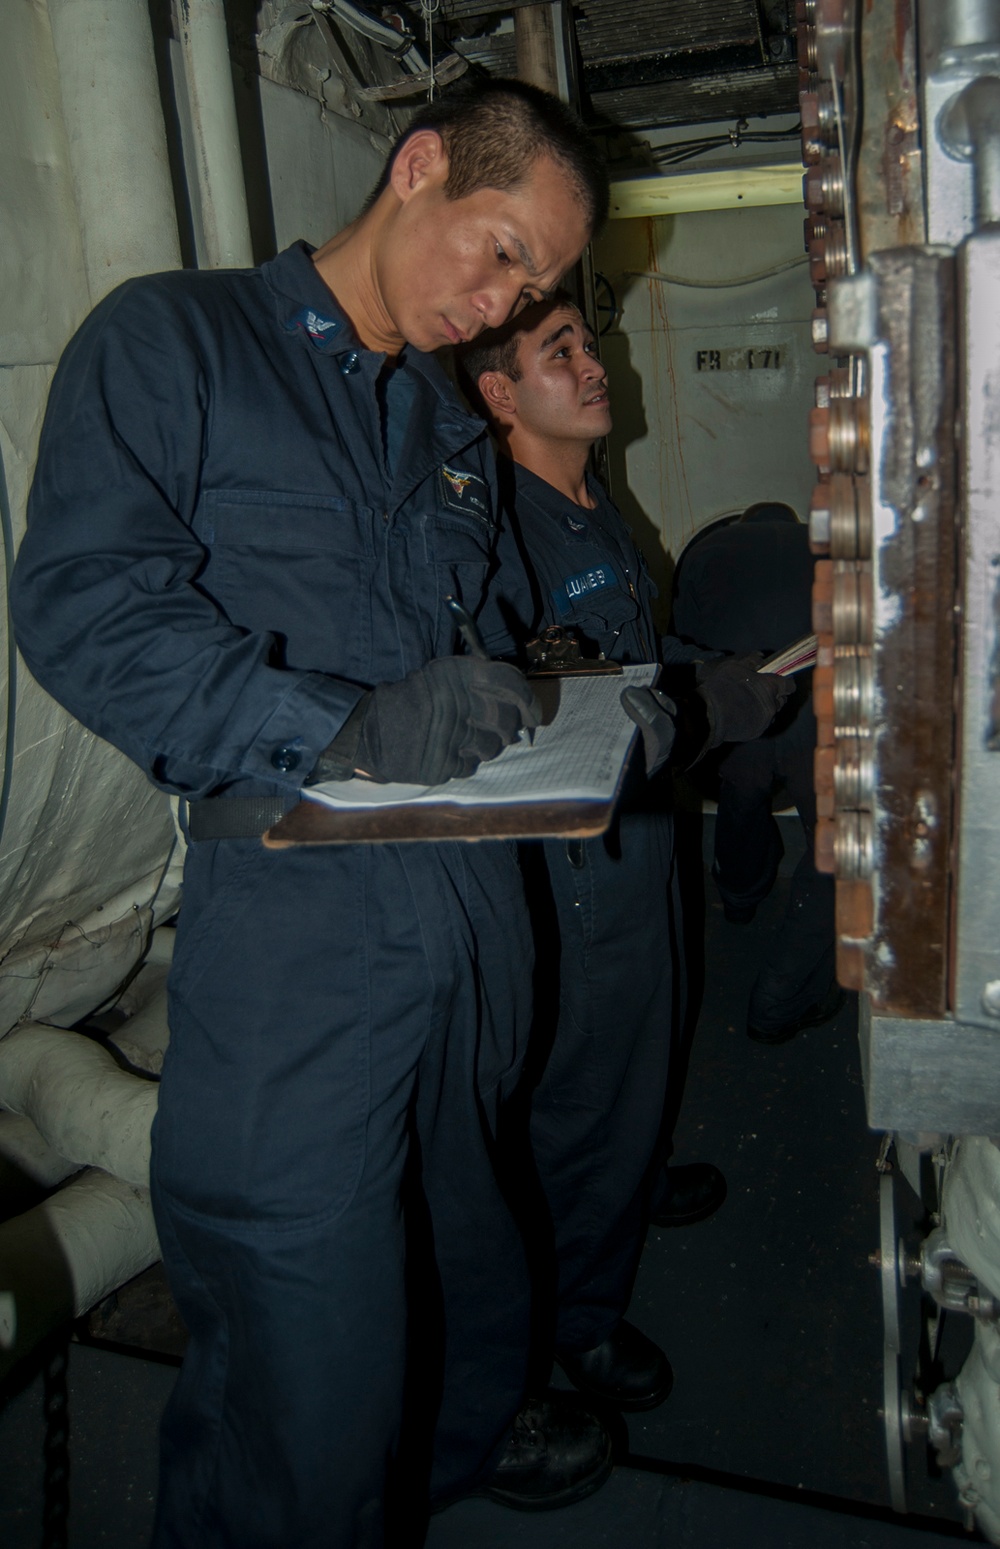 USS Carl Vinson operations